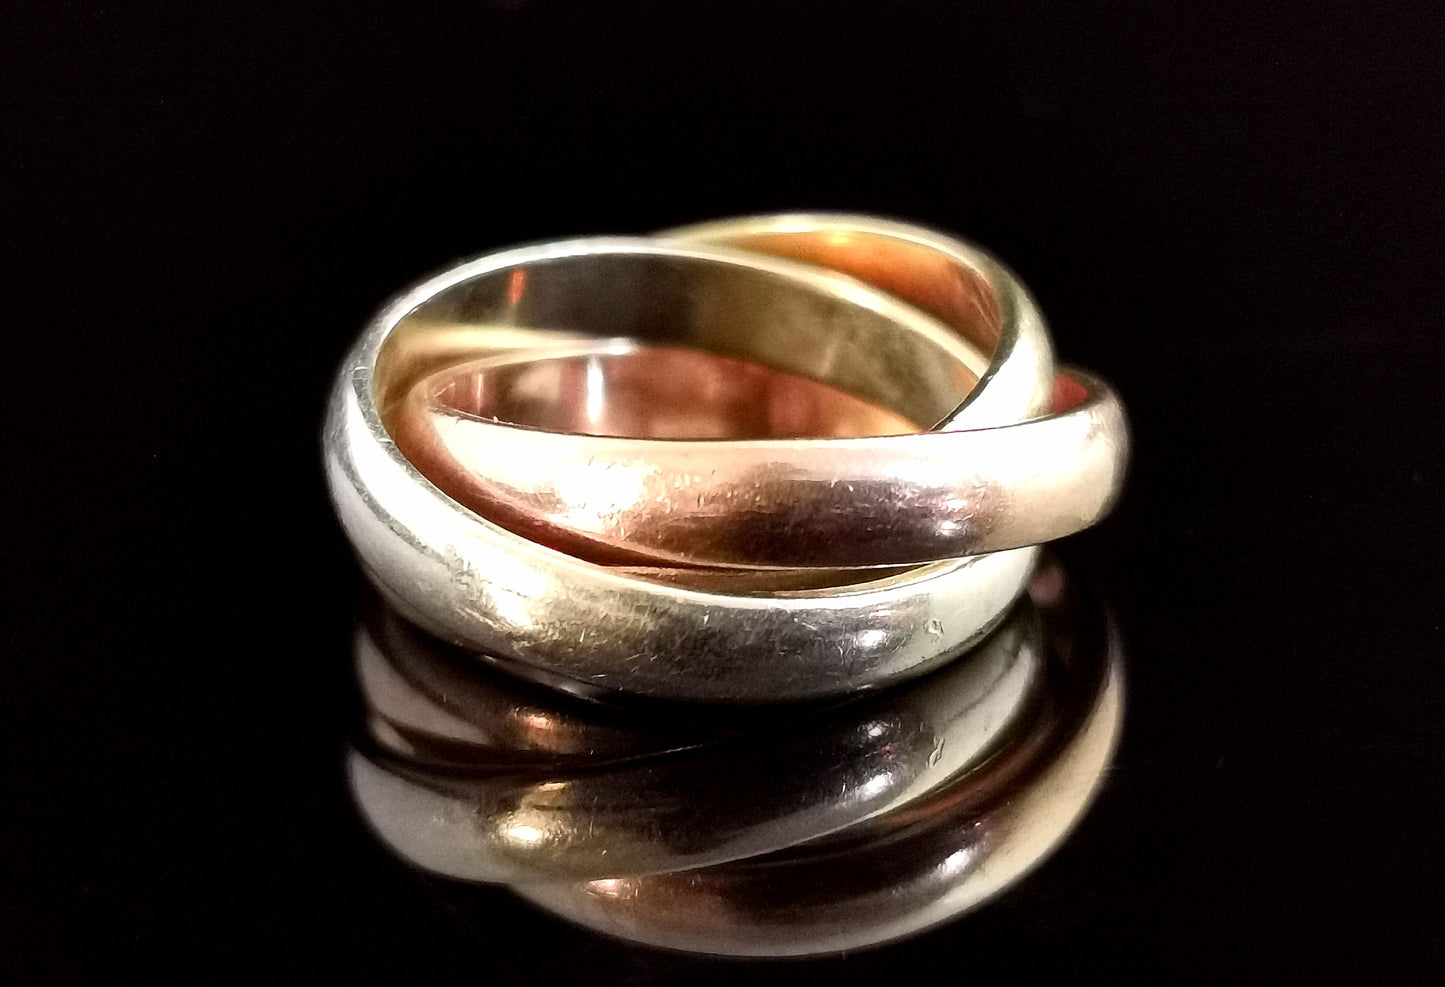 Vintage Russian wedding ring, tri colour 9ct gold, Interlocking bands